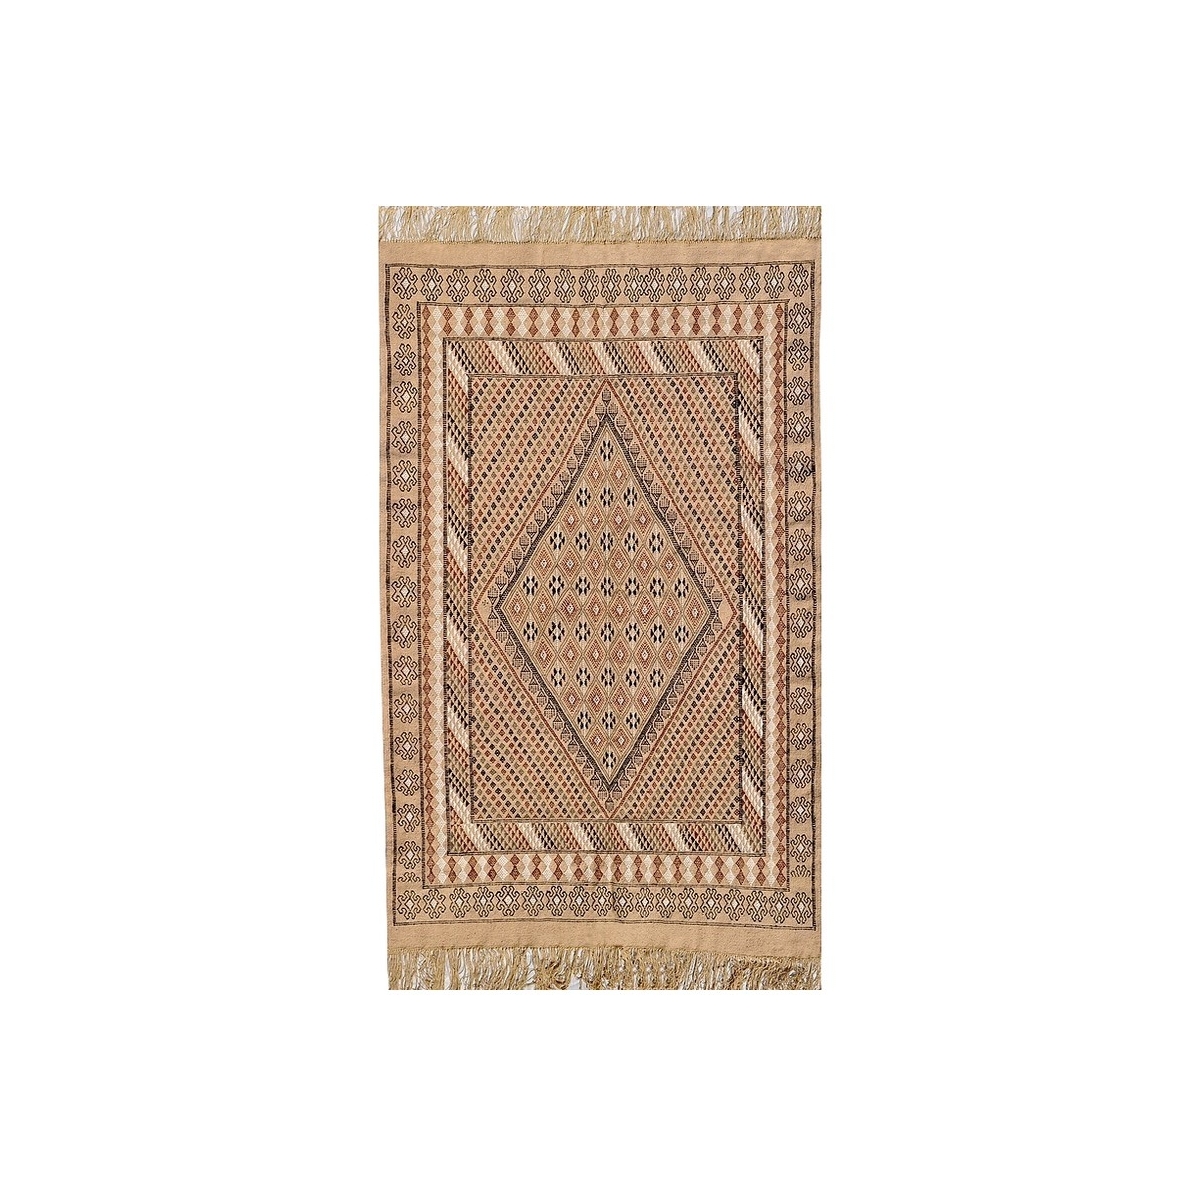 Berber carpet Rug Margoum Bulla regia 110x200 Beige/Brown (Handmade, Wool) Tunisian margoum rug from the city of Kairouan. Recta